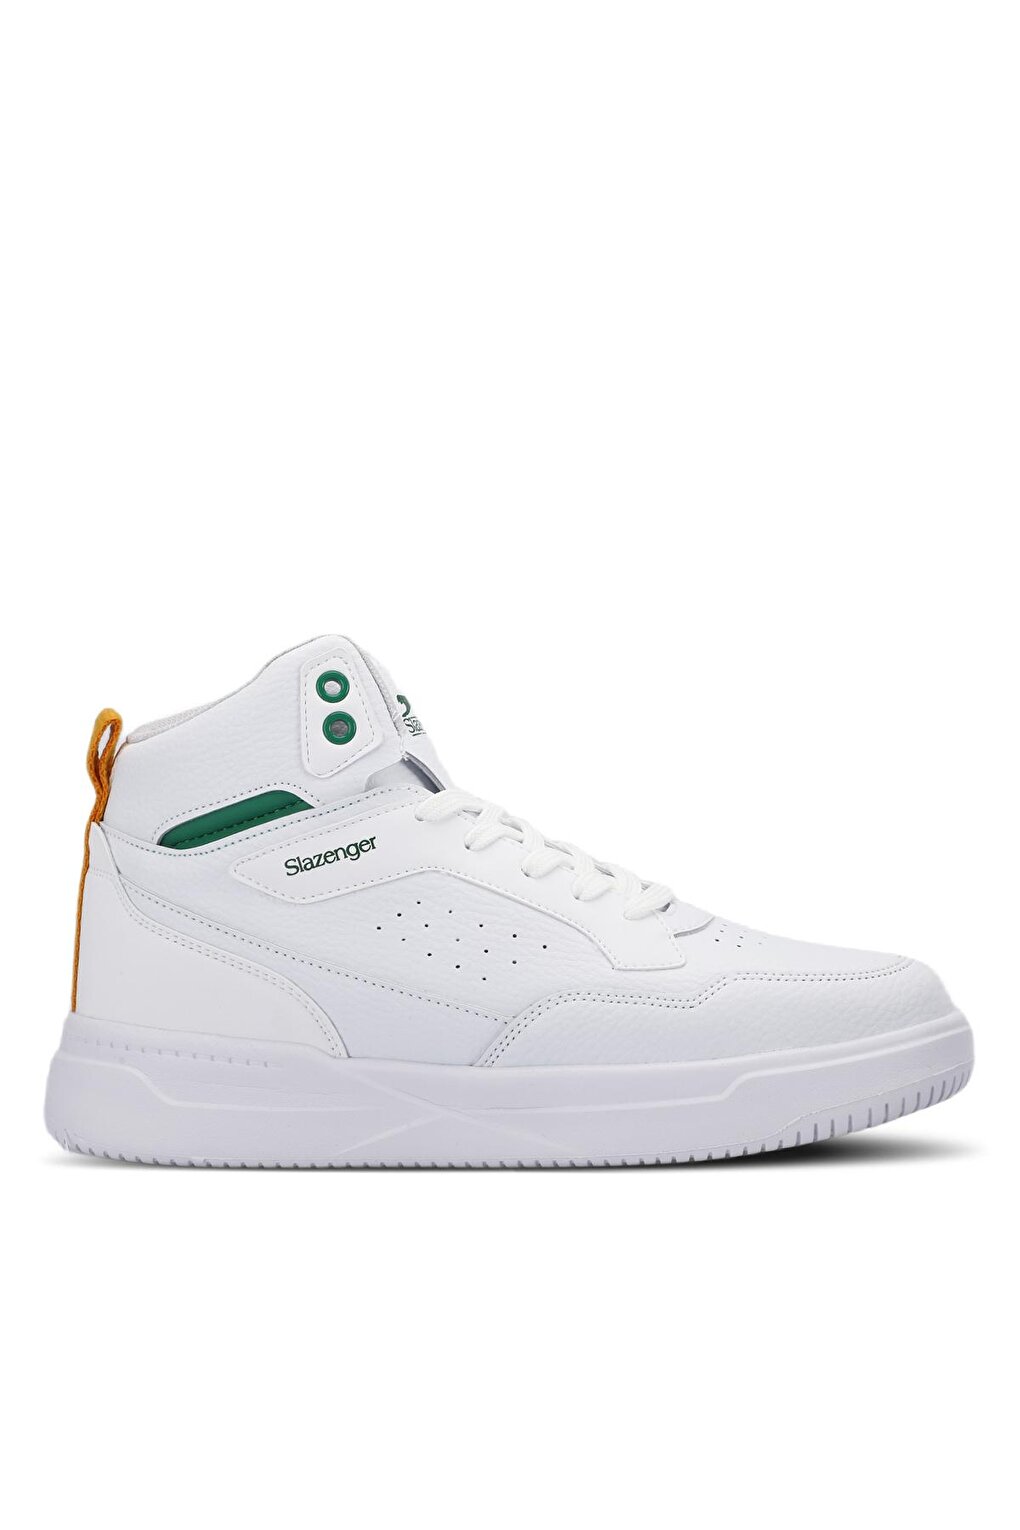 LALI Sneaker Мужская обувь Белый/Зеленый SLAZENGER